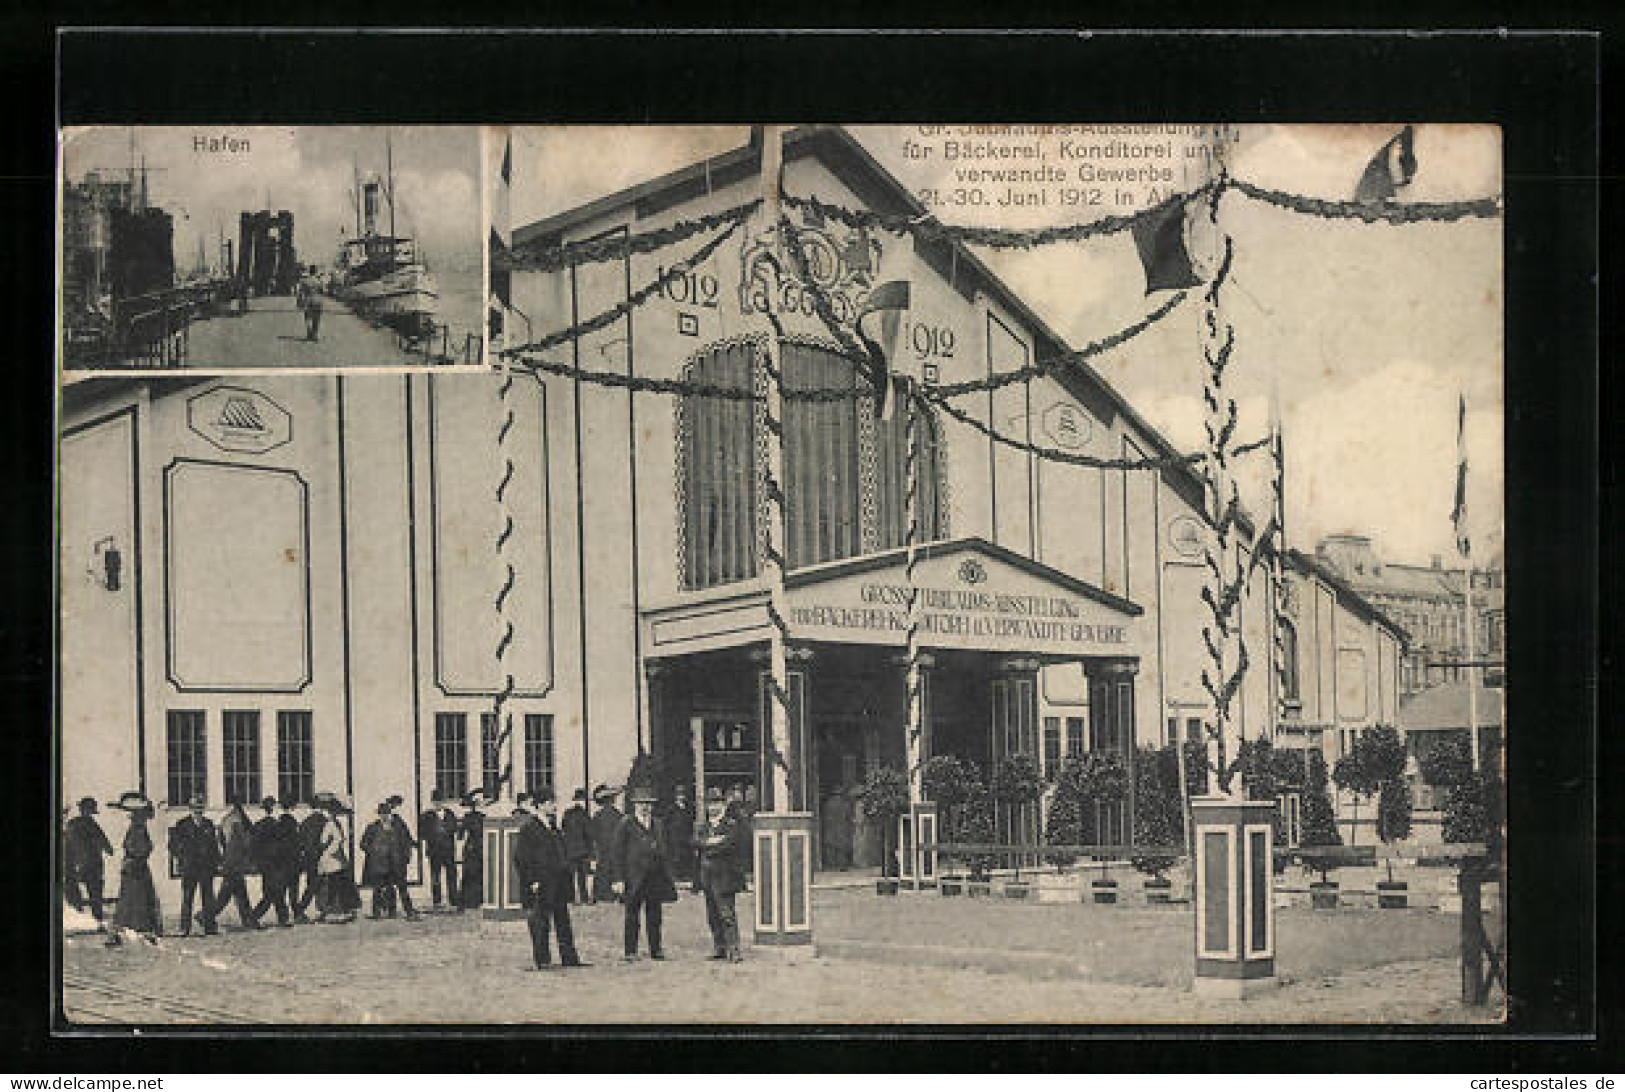 AK Hamburg-Altona, Bäckerei - Und Konditorei-Ausstellung 1912, Ausstellungs-Pavillon  - Expositions